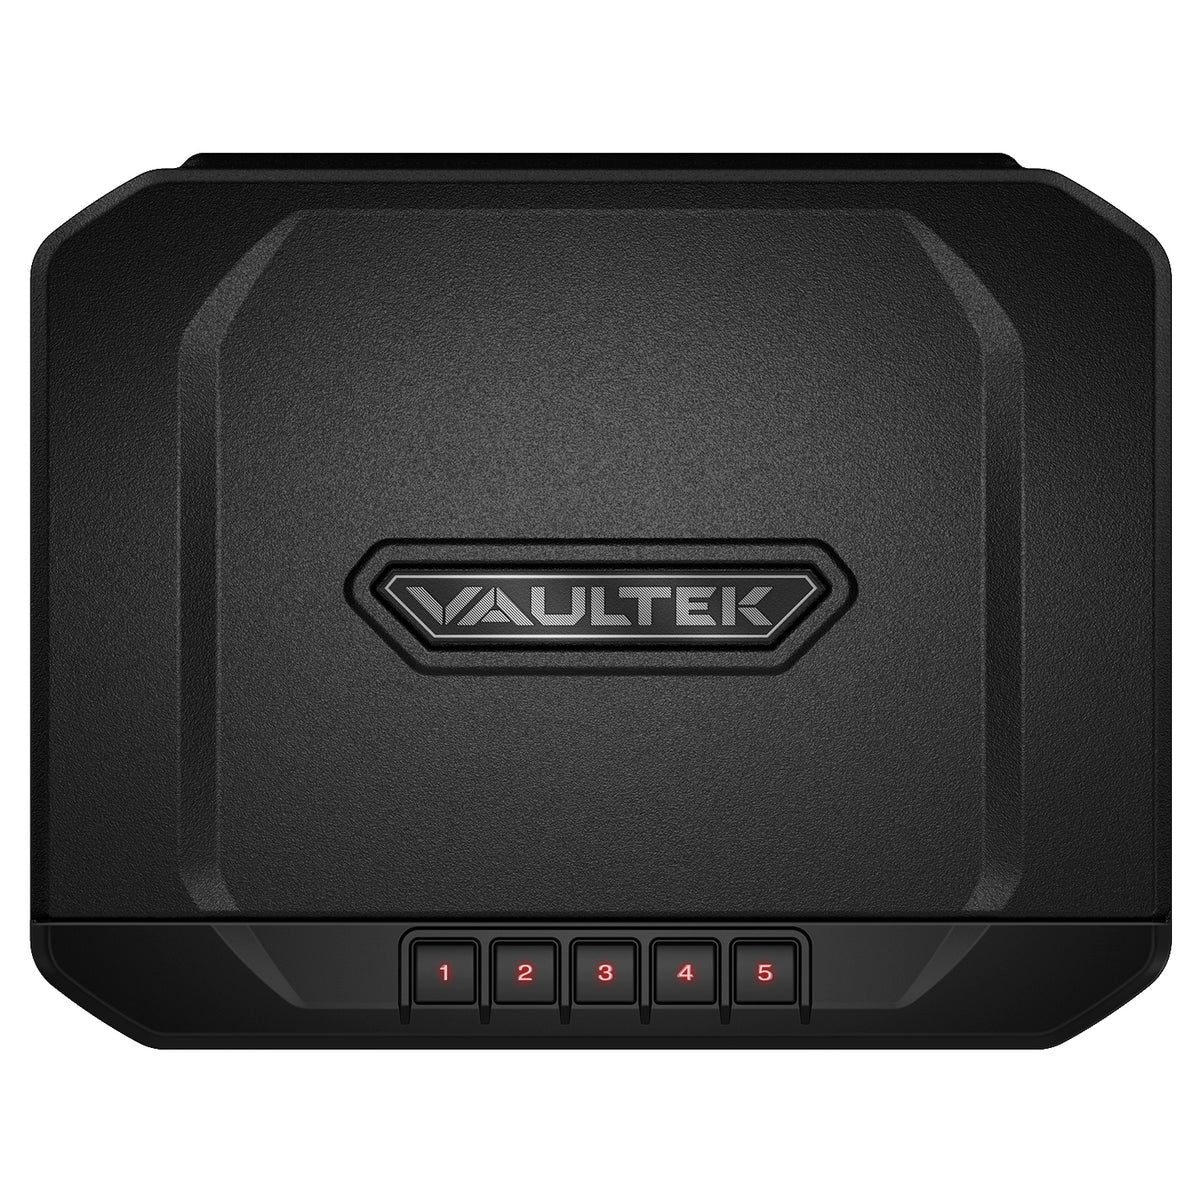 Vaultek - 20 Series VS20 Compact Bluetooth and Keypad Gun Safe